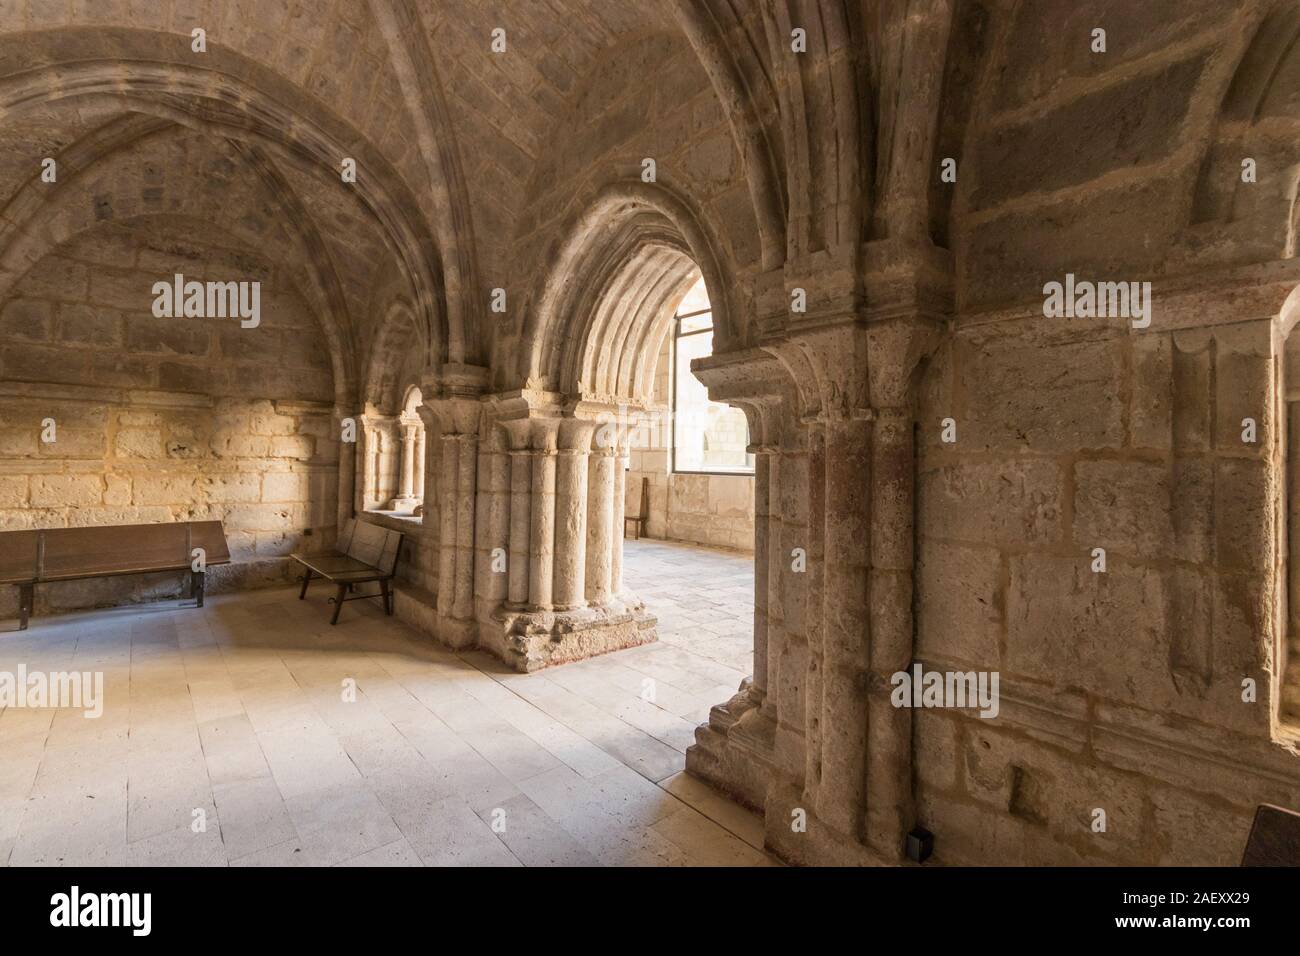 Castromonte, Spain. The Sala Capitular (Chapterhouse) of the monastery of La Santa Espina (Holy Thorn) Stock Photo